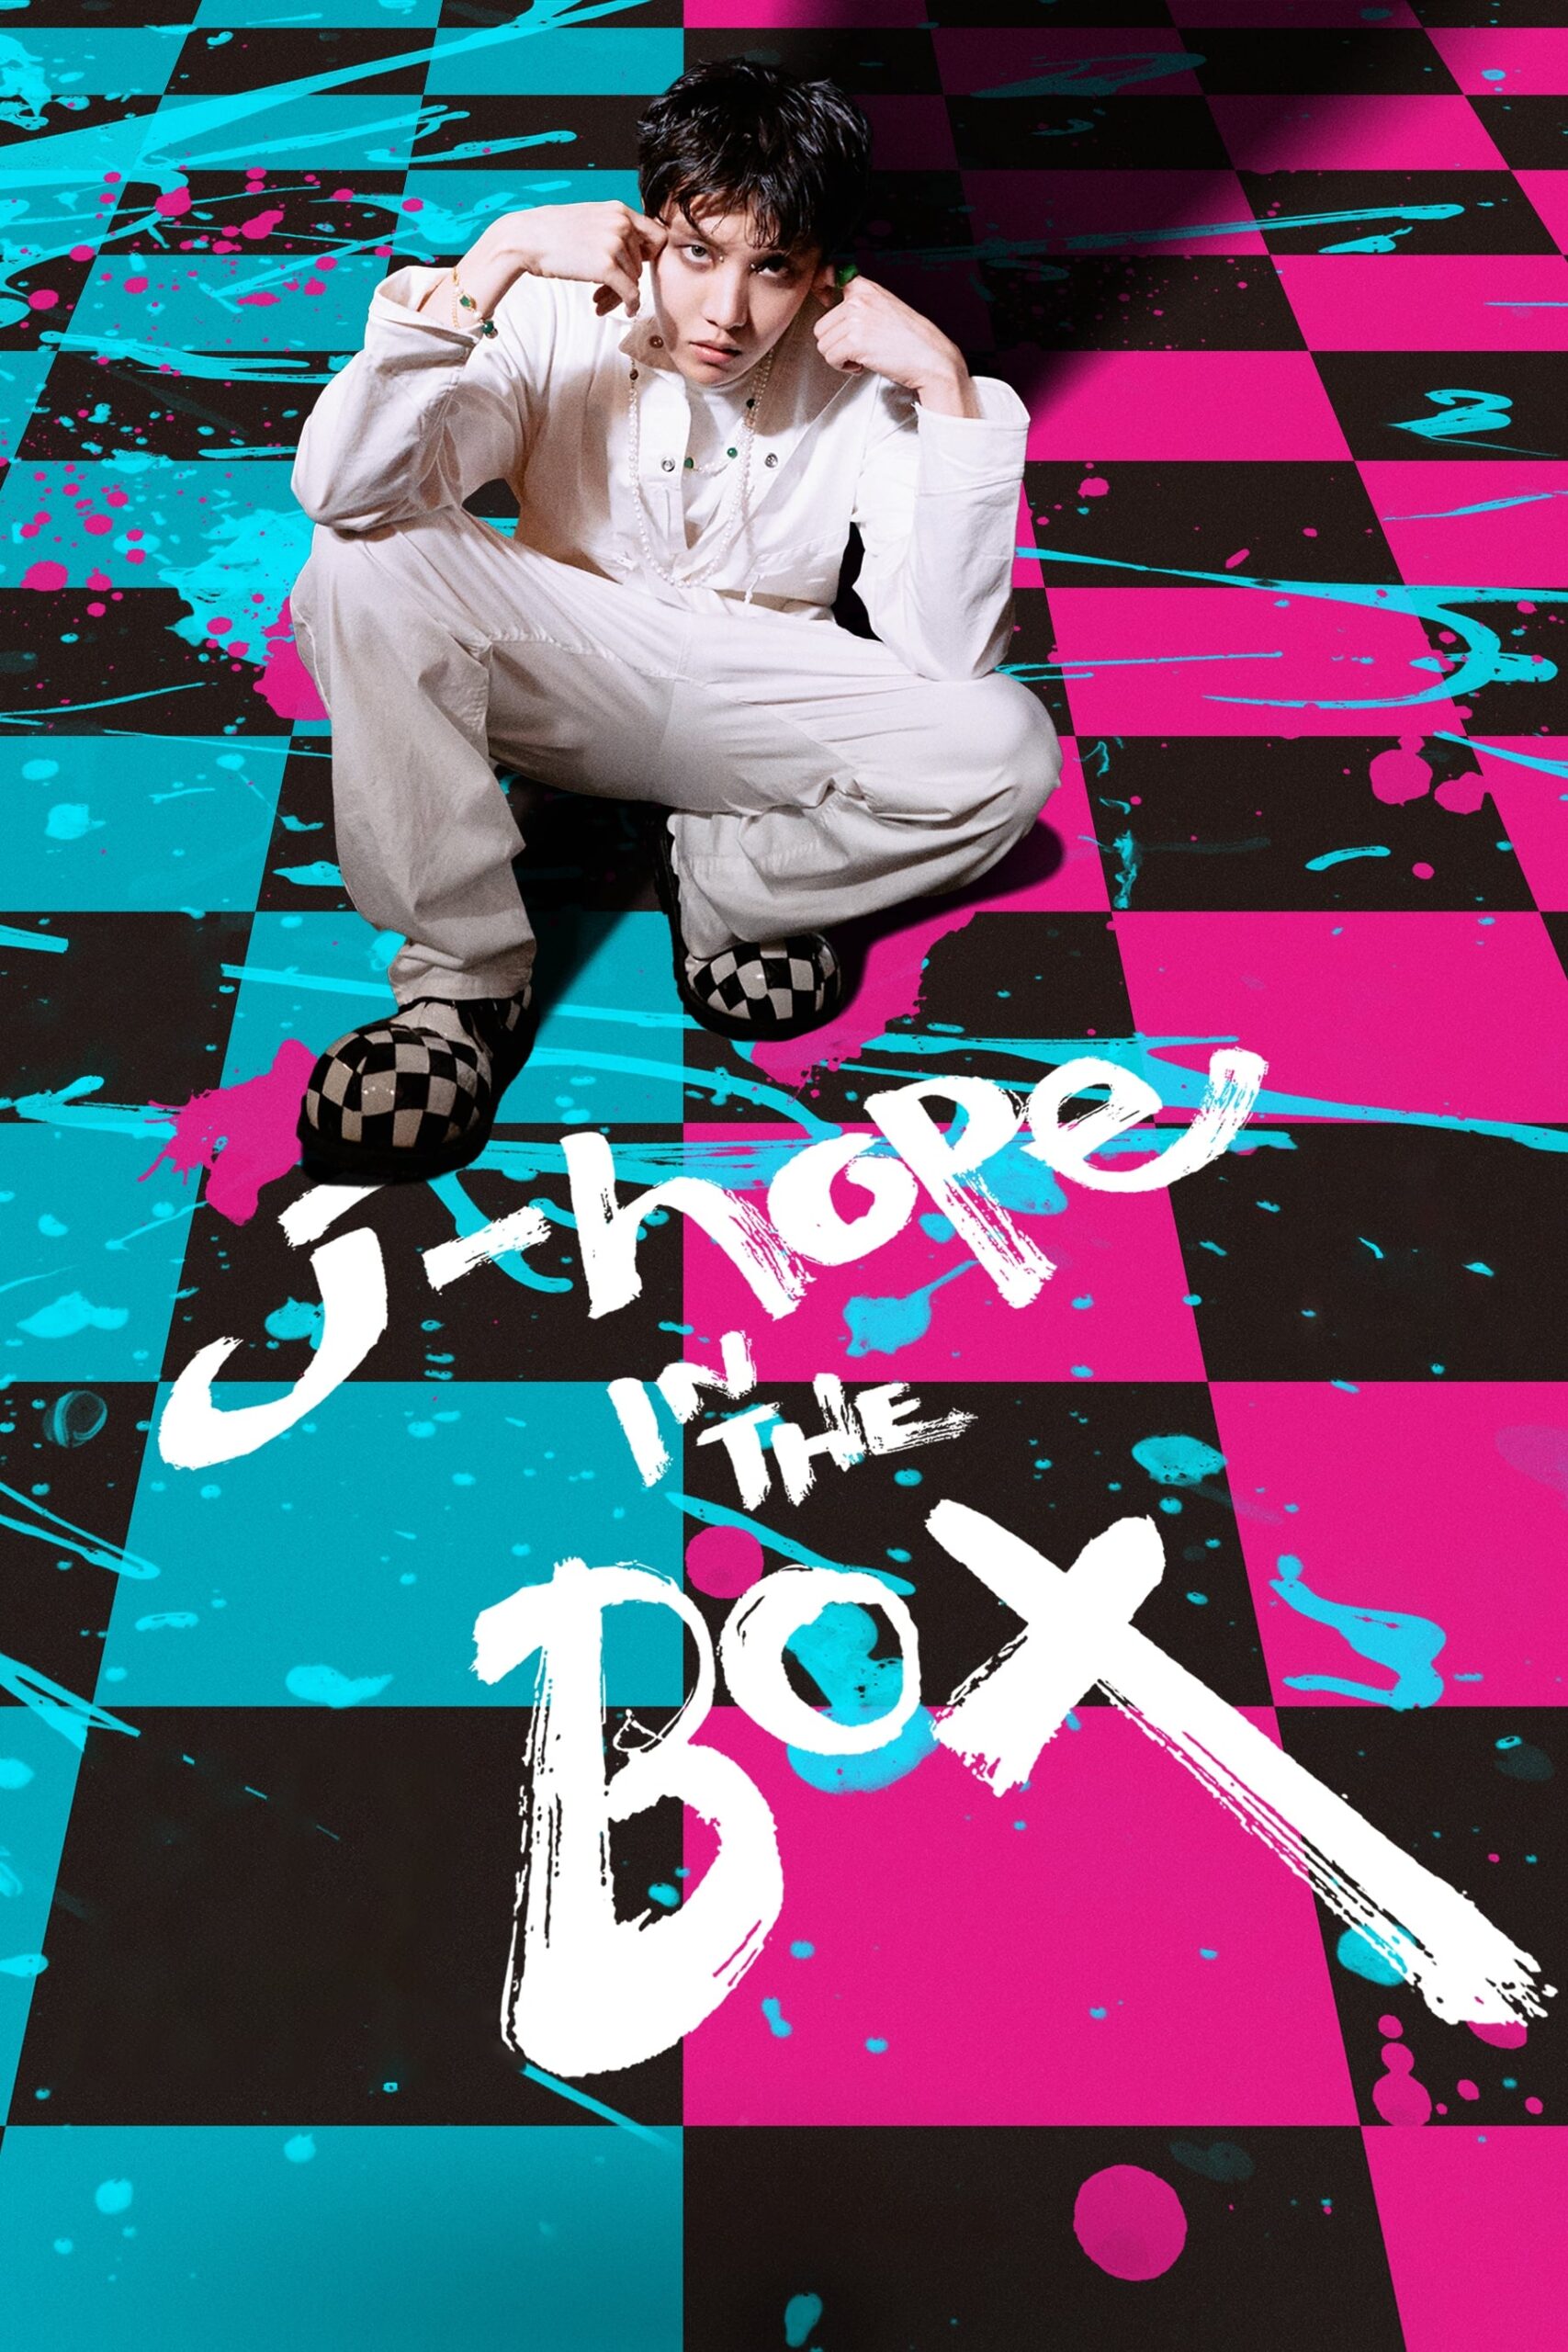 جی-هوپ در جعبه (j-hope IN THE BOX)